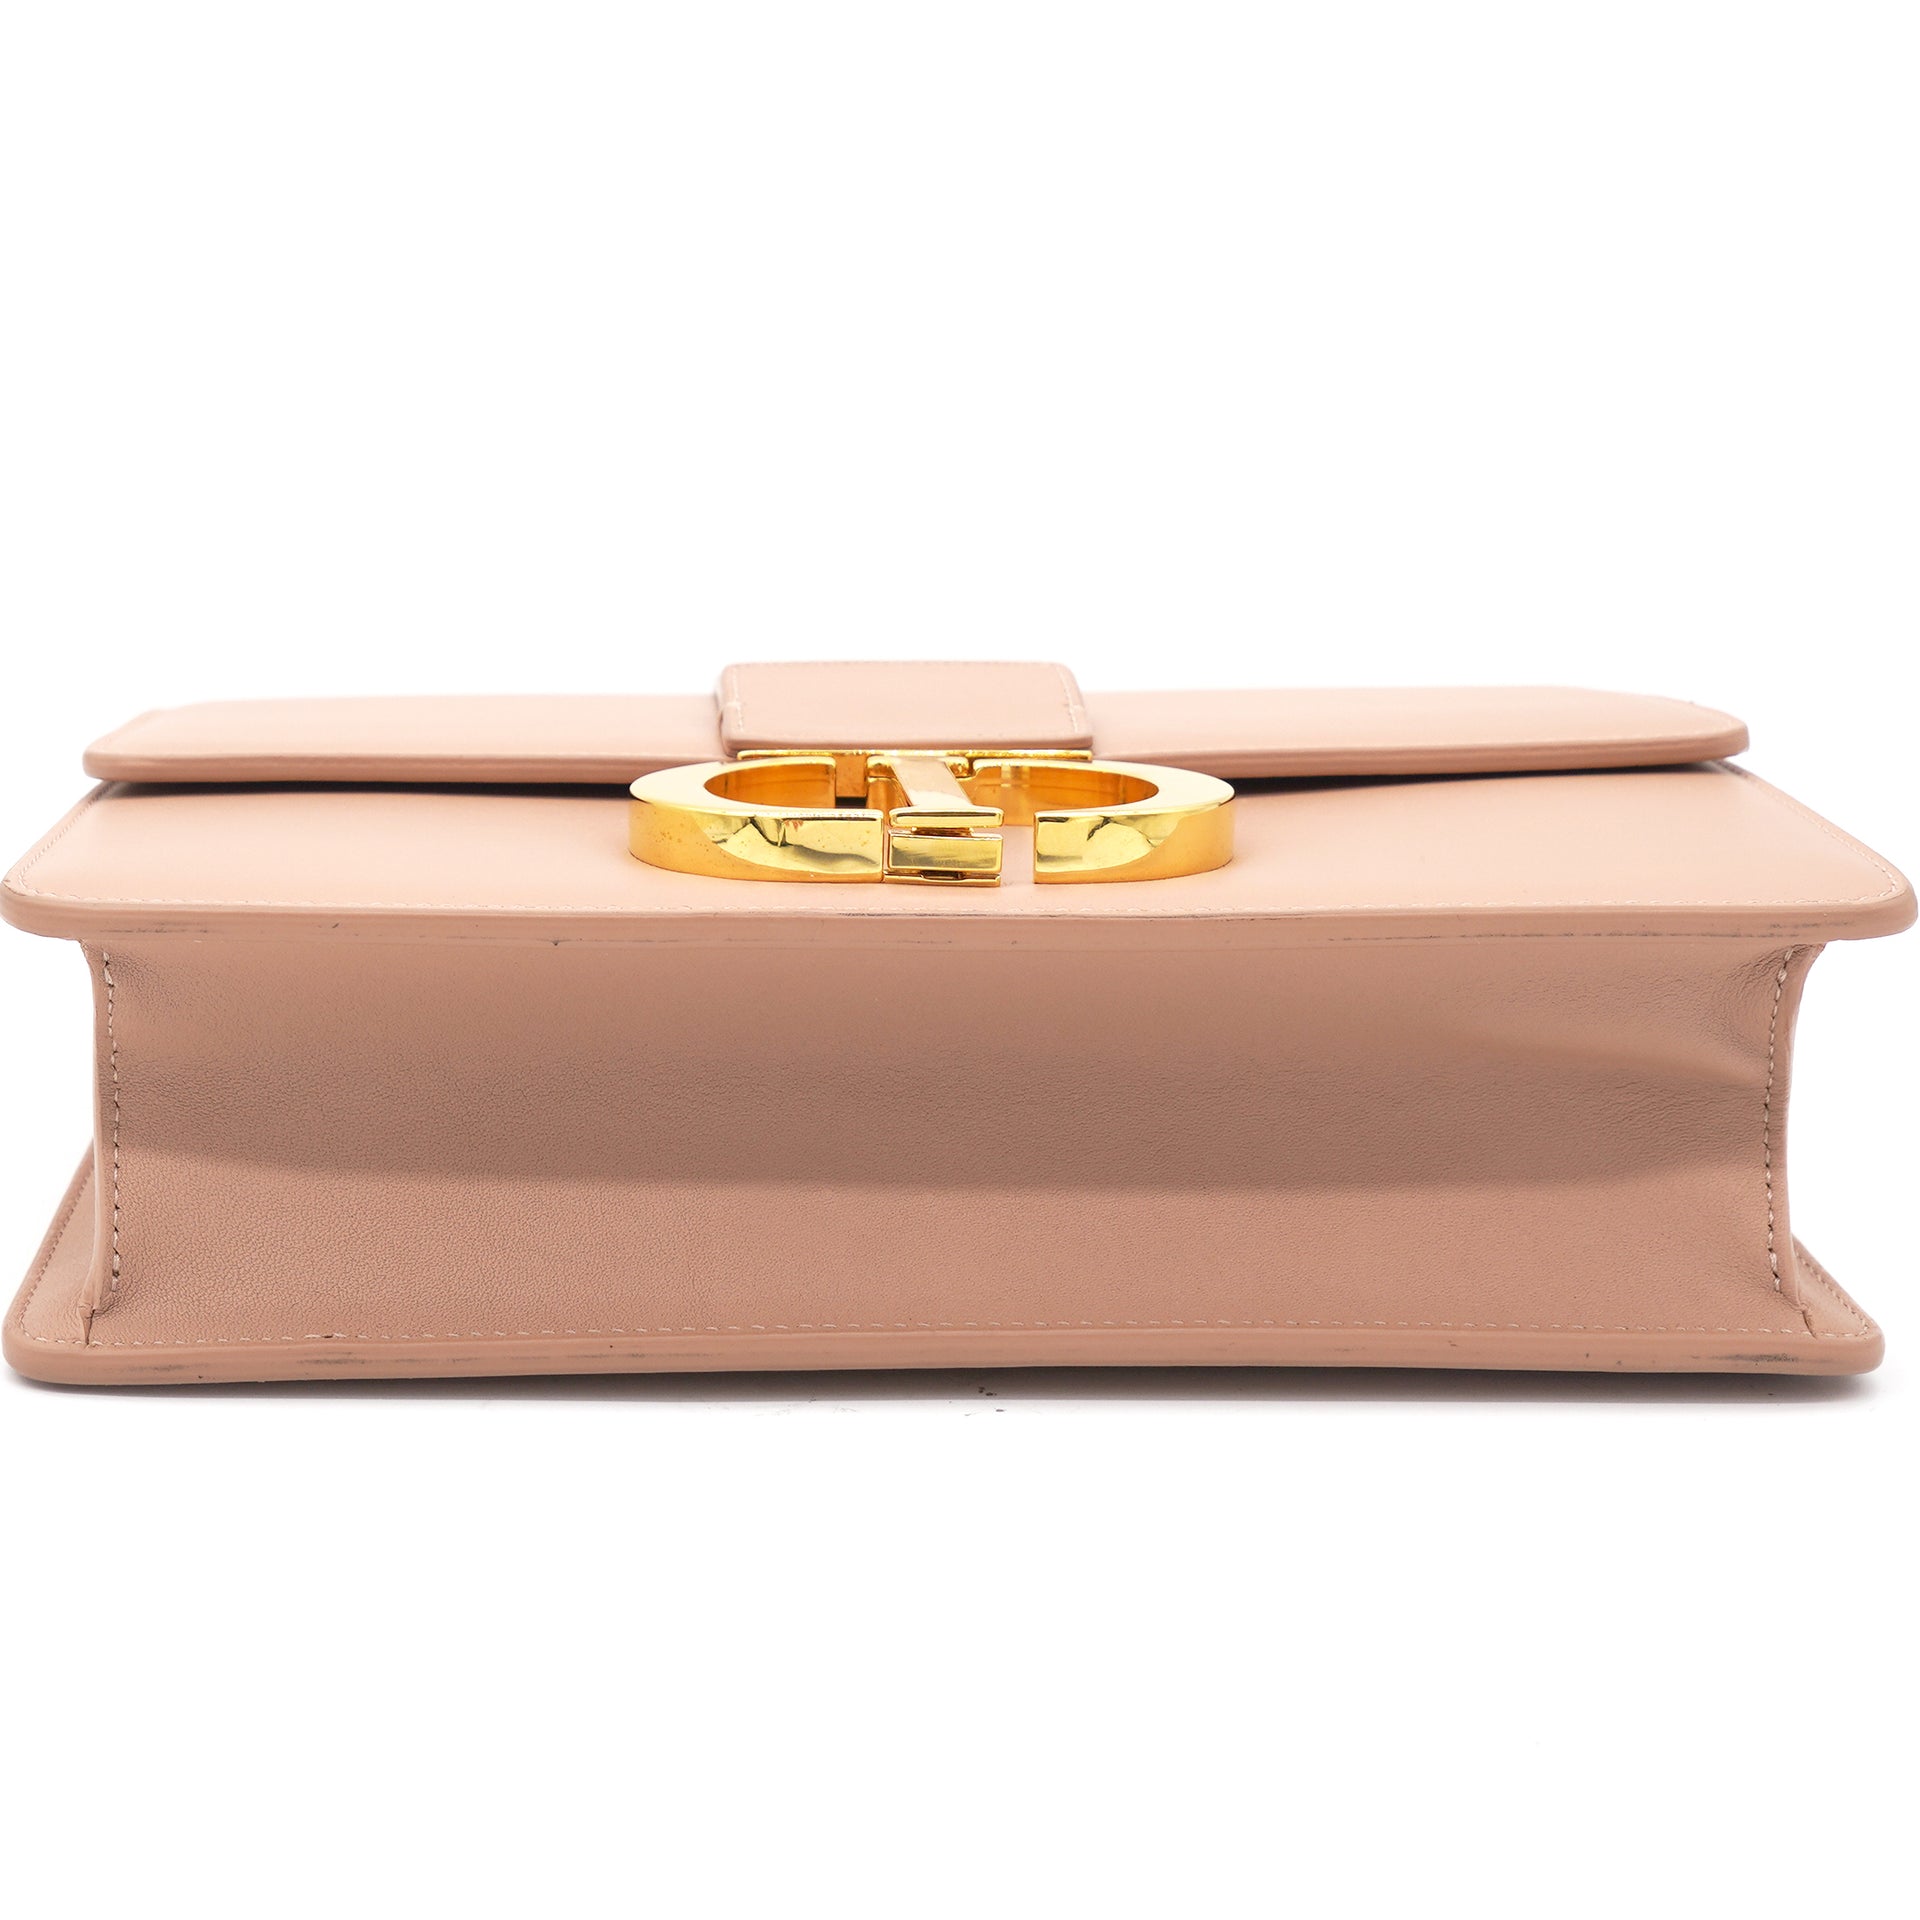 30 Montaigne Micro Bag Rose Des Vents Box Calfskin